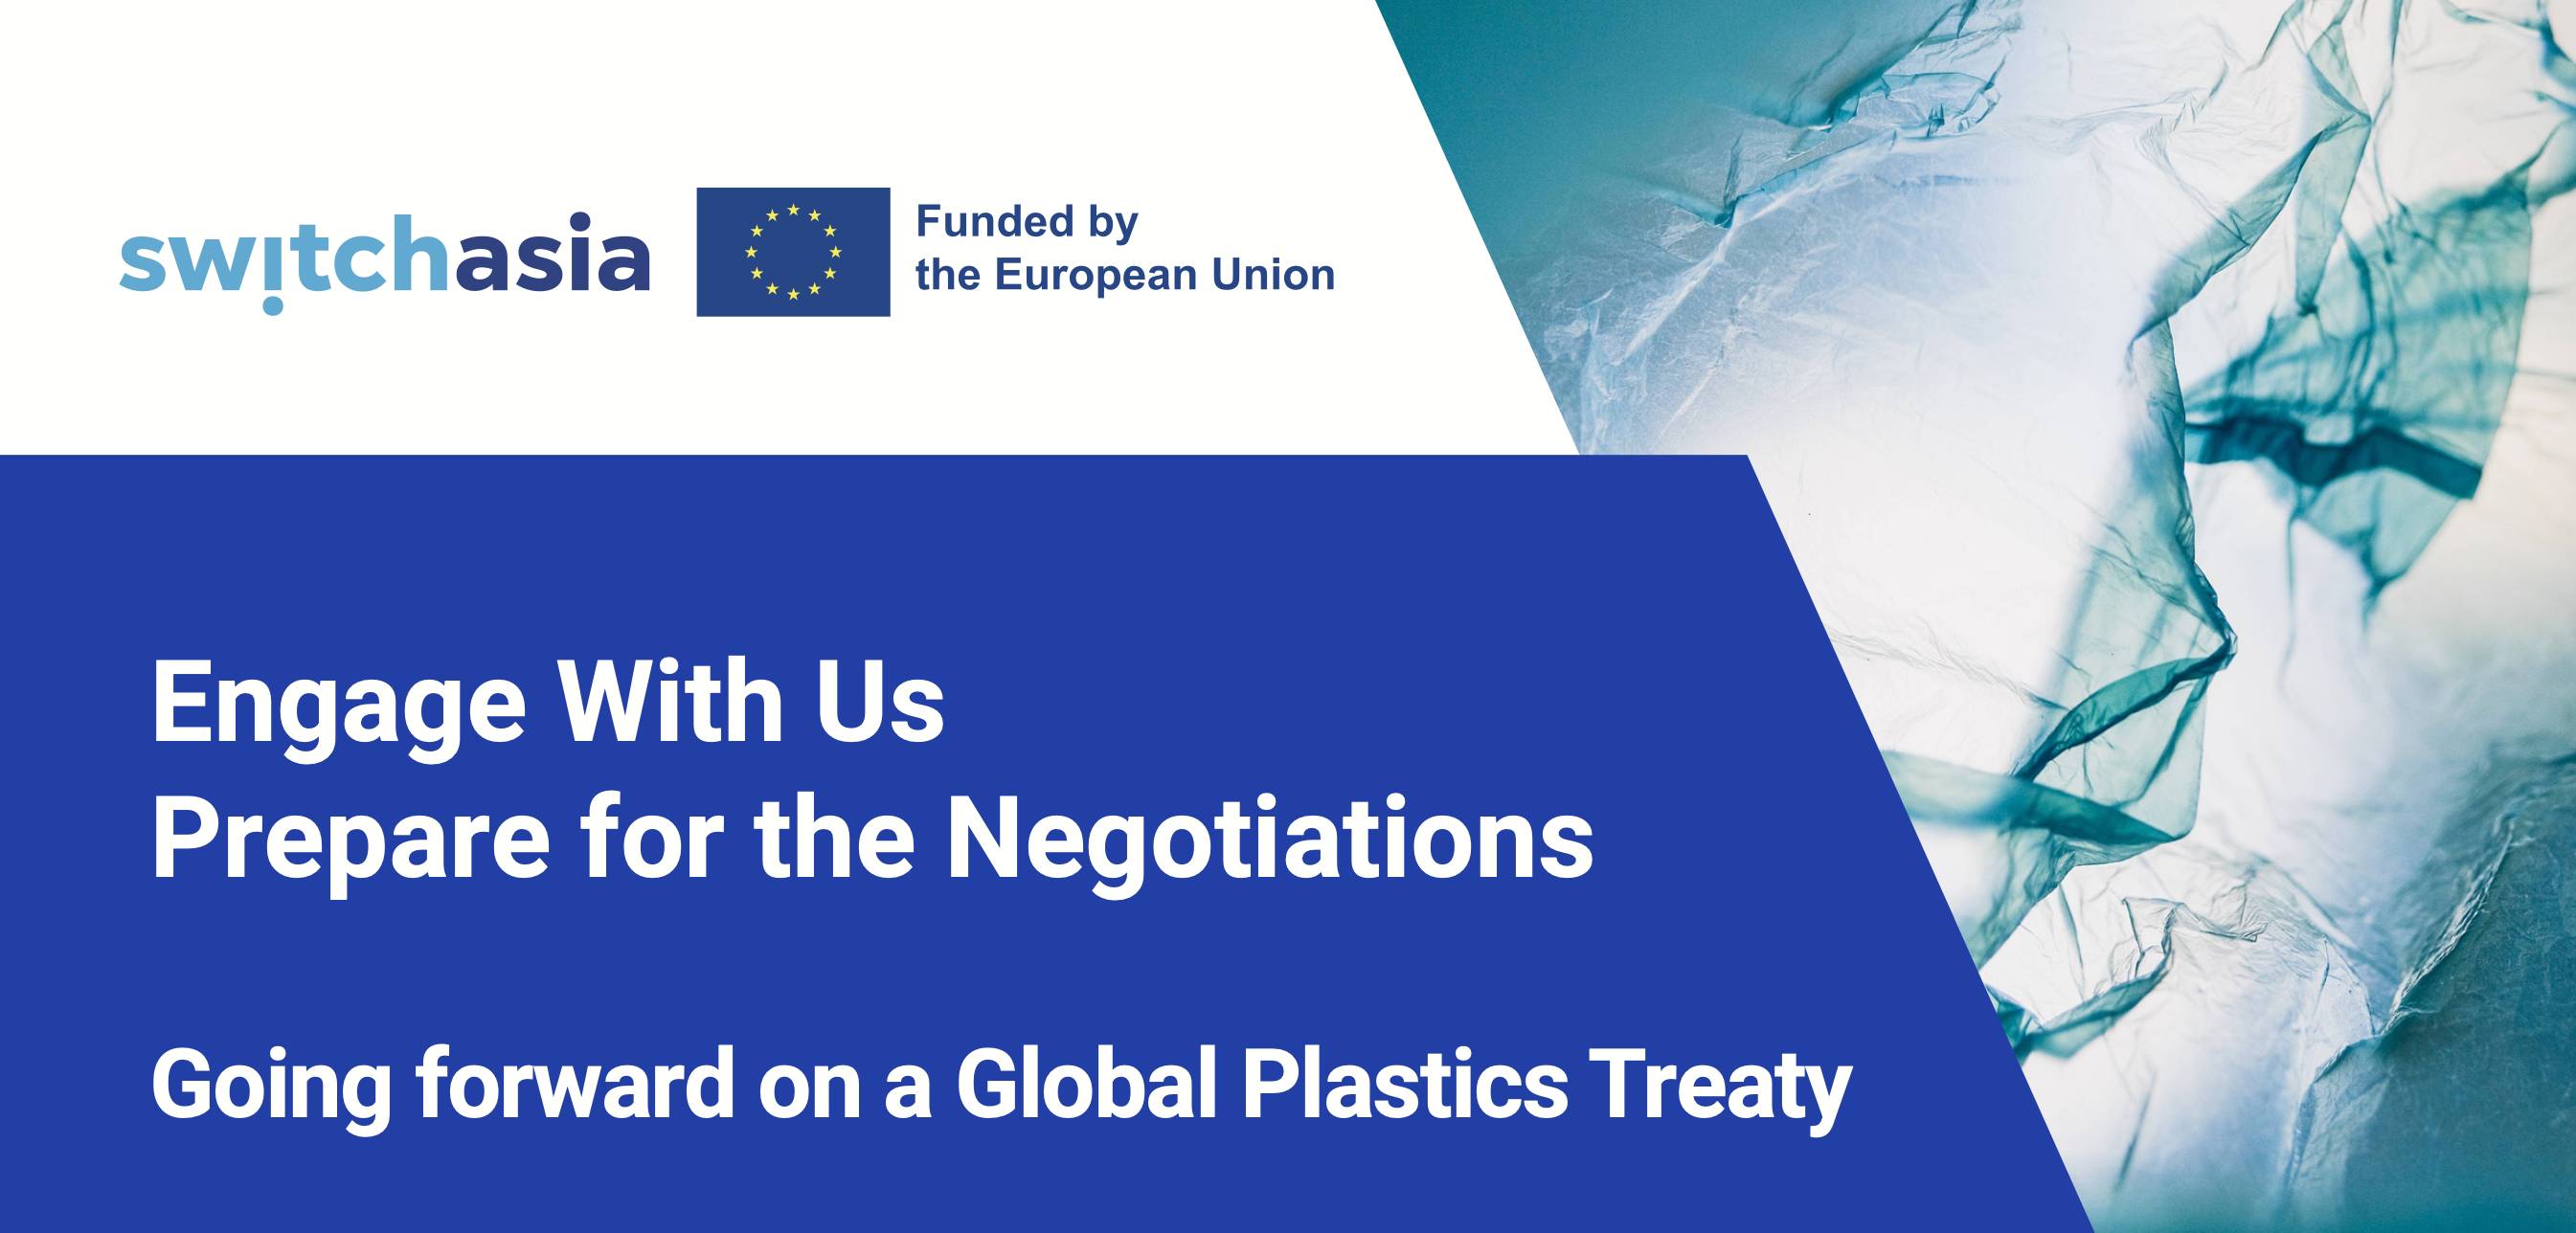 Going forward on a Global Plastics Treaty